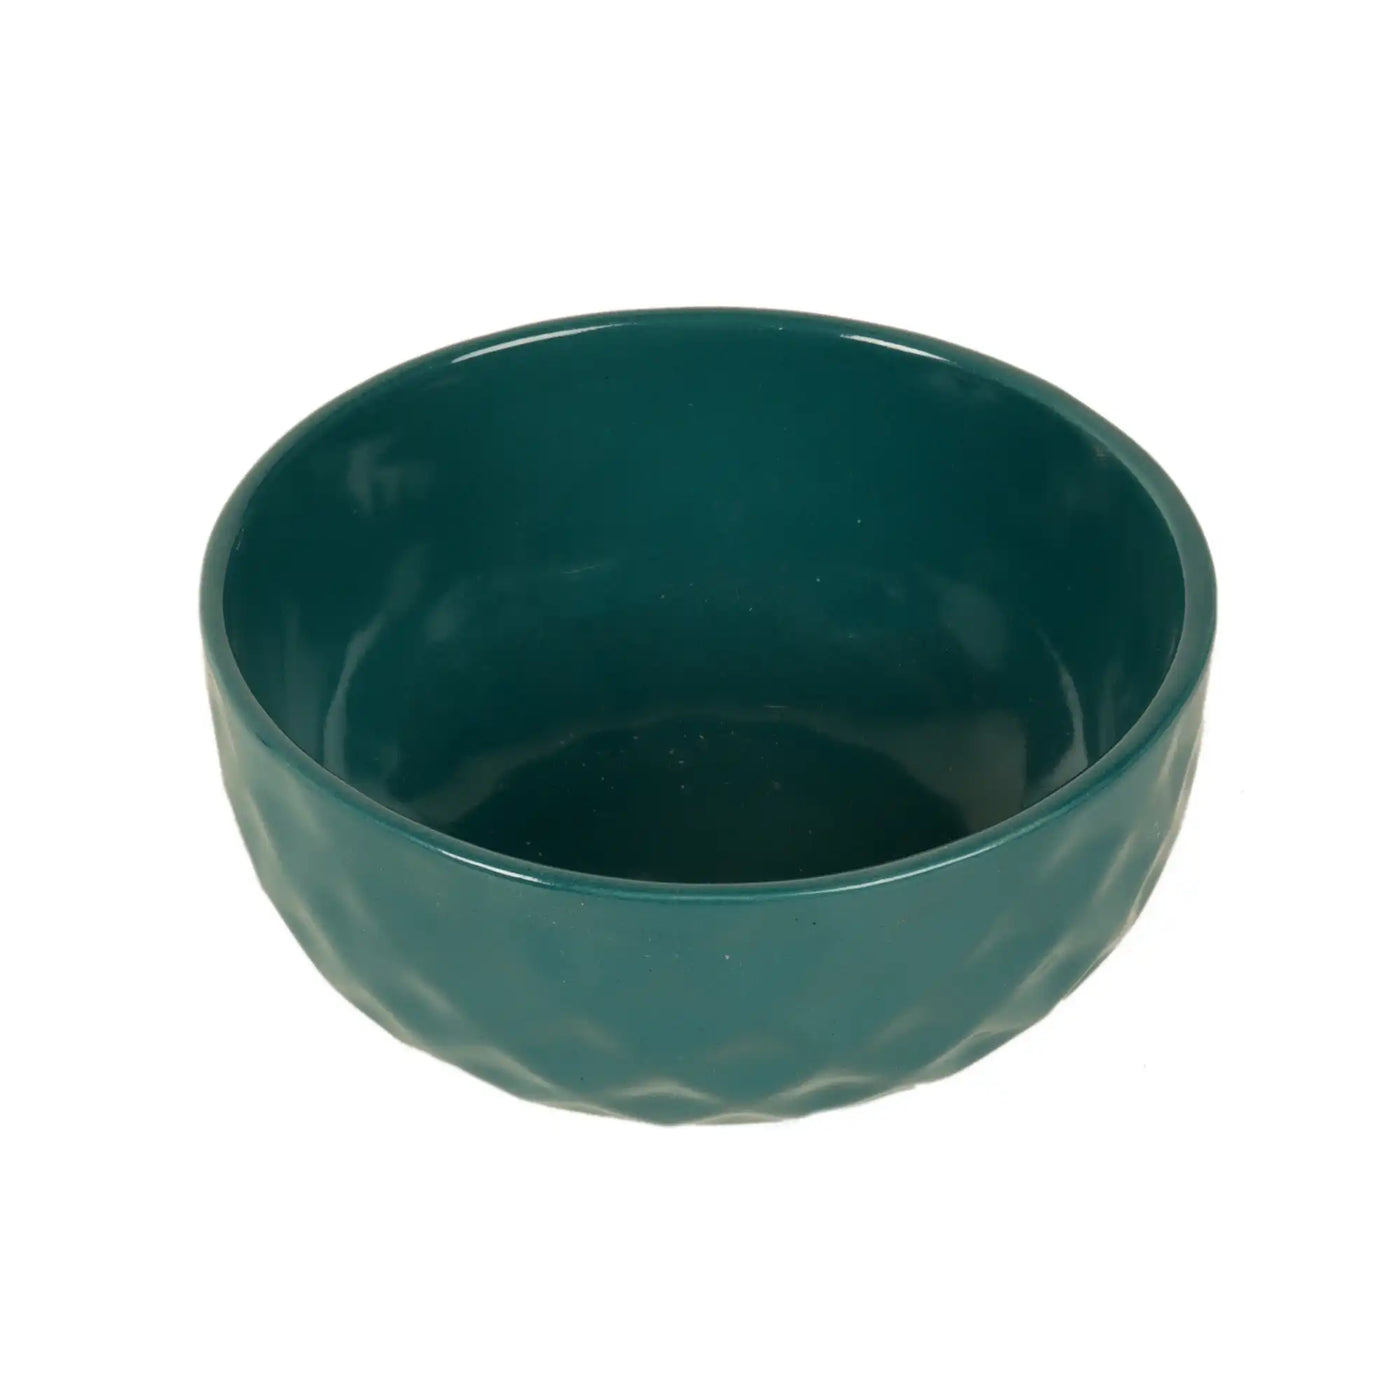 Green Ceramic Mug with Bowl Set of 6